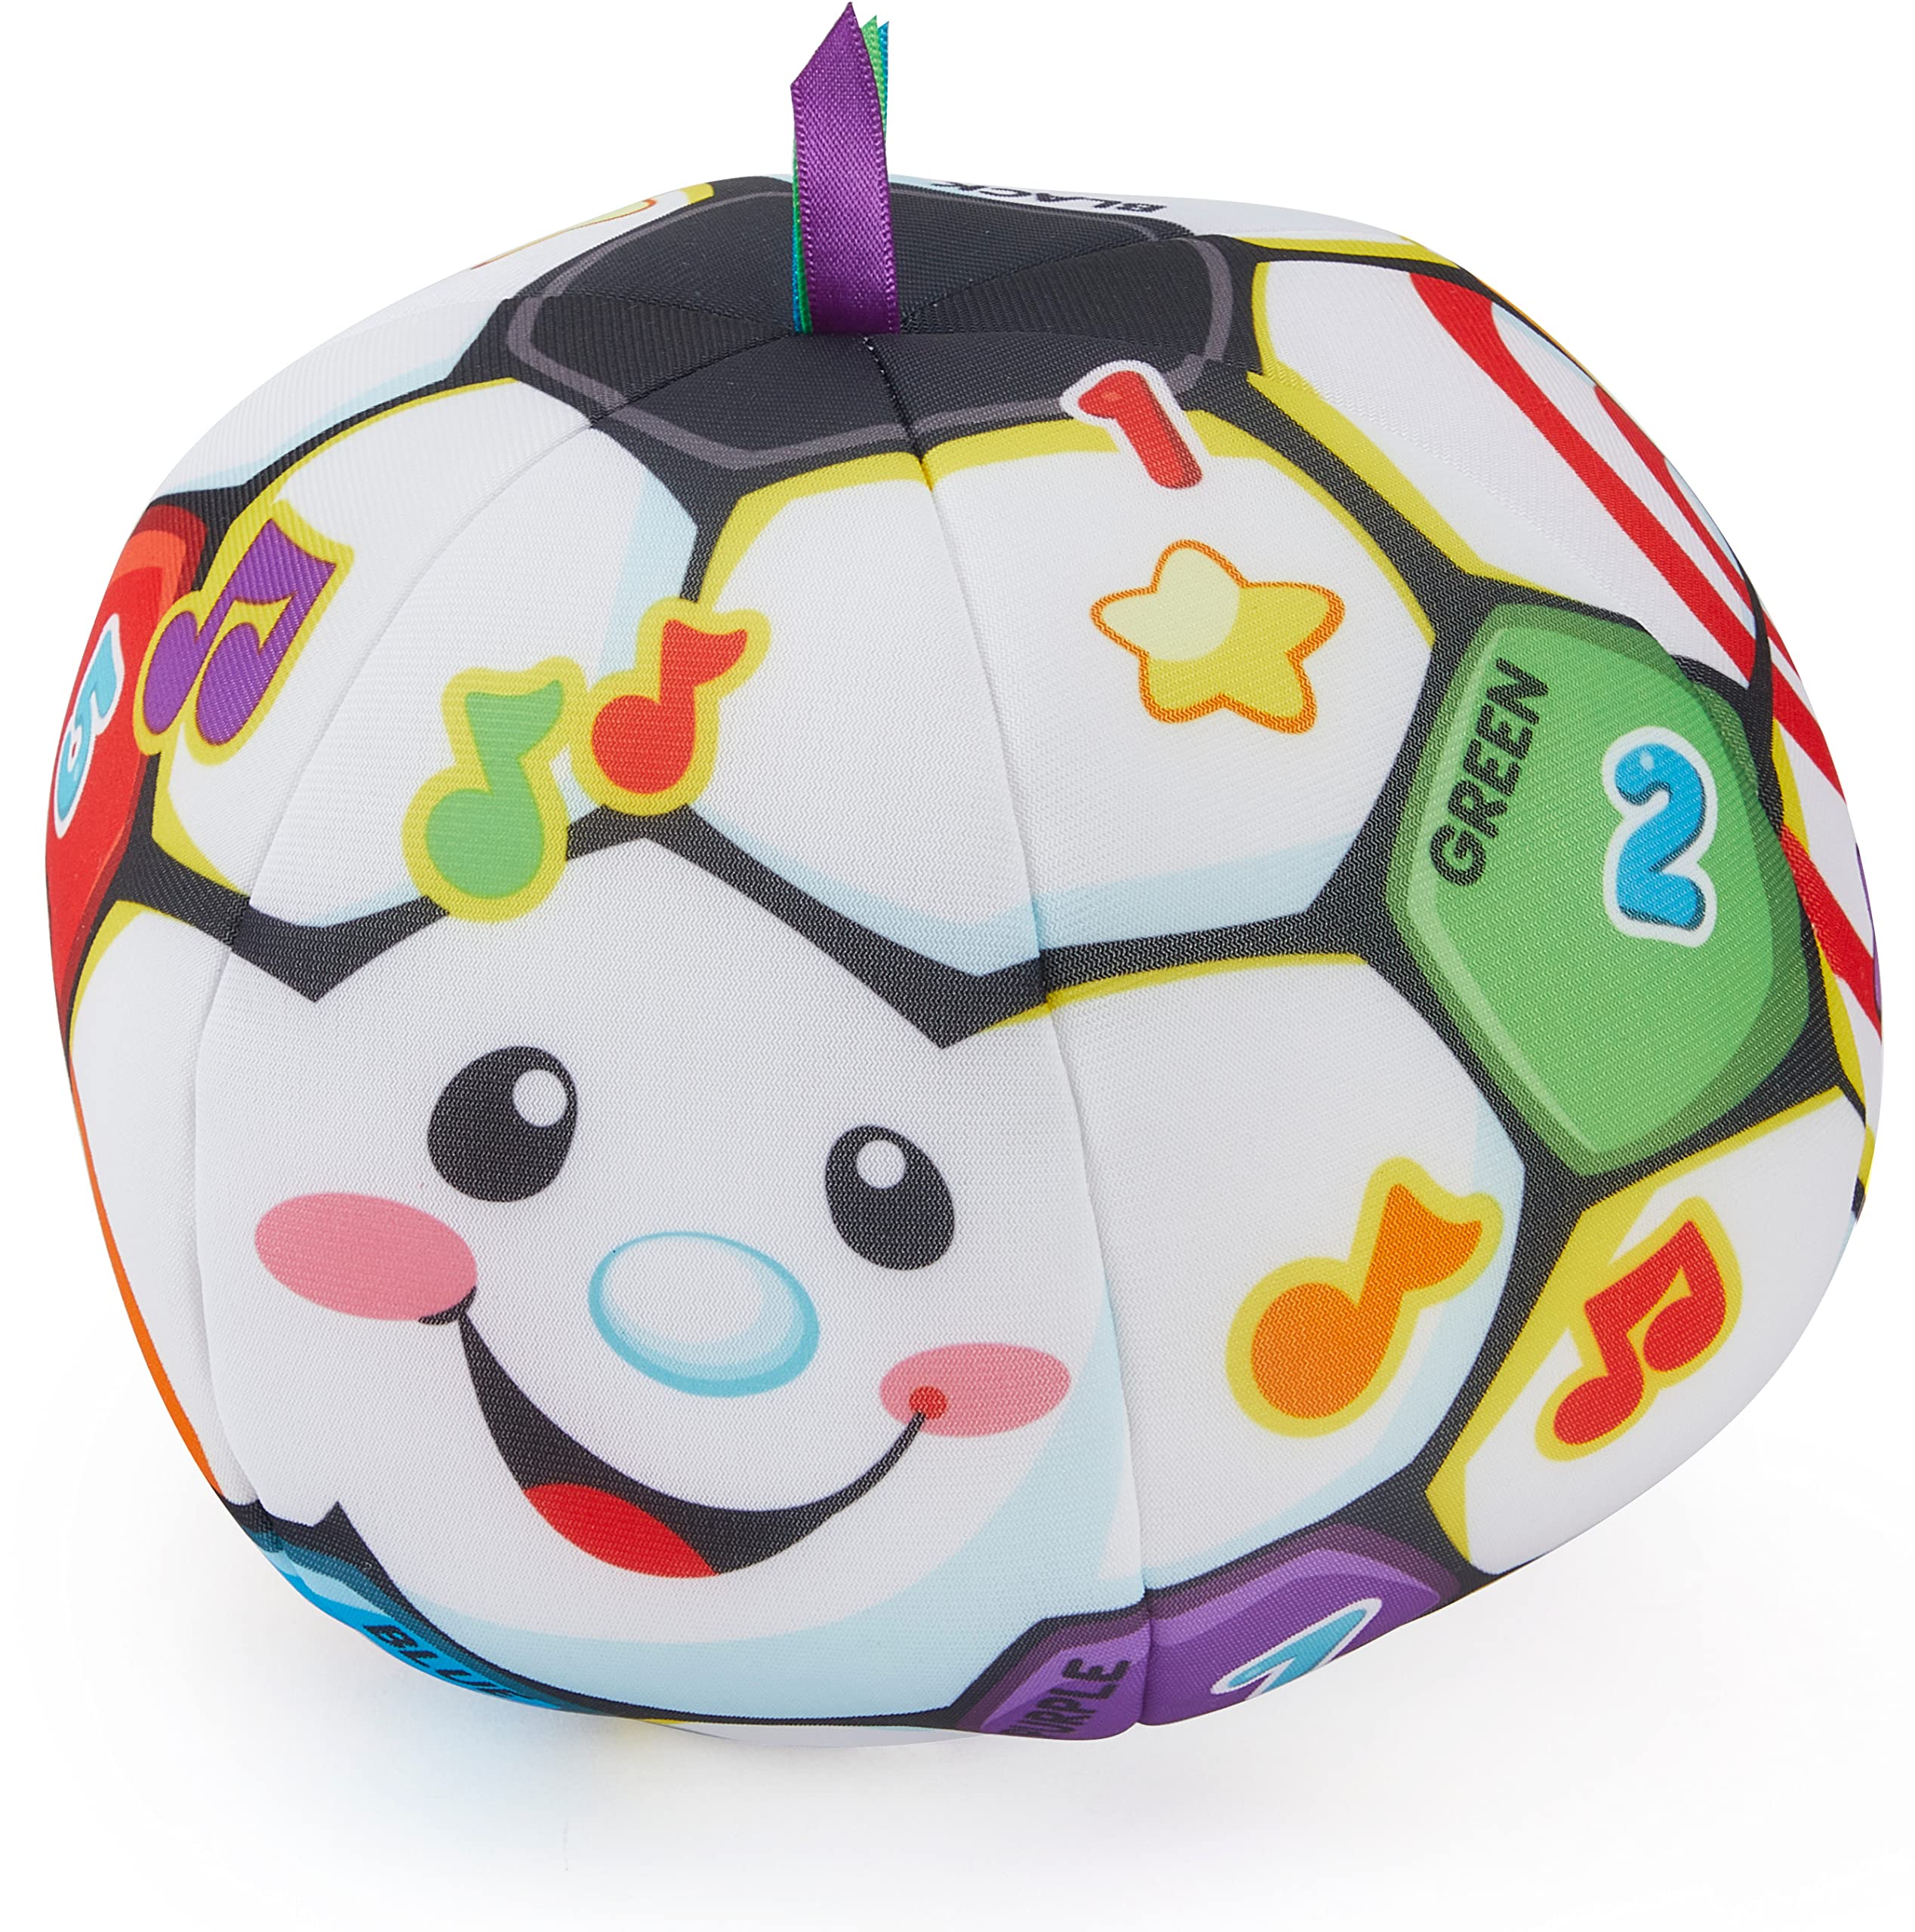 Fisher-Price Pelota de fútbol Cantando, pelota de juguete suave con música y frases de aprendizaje